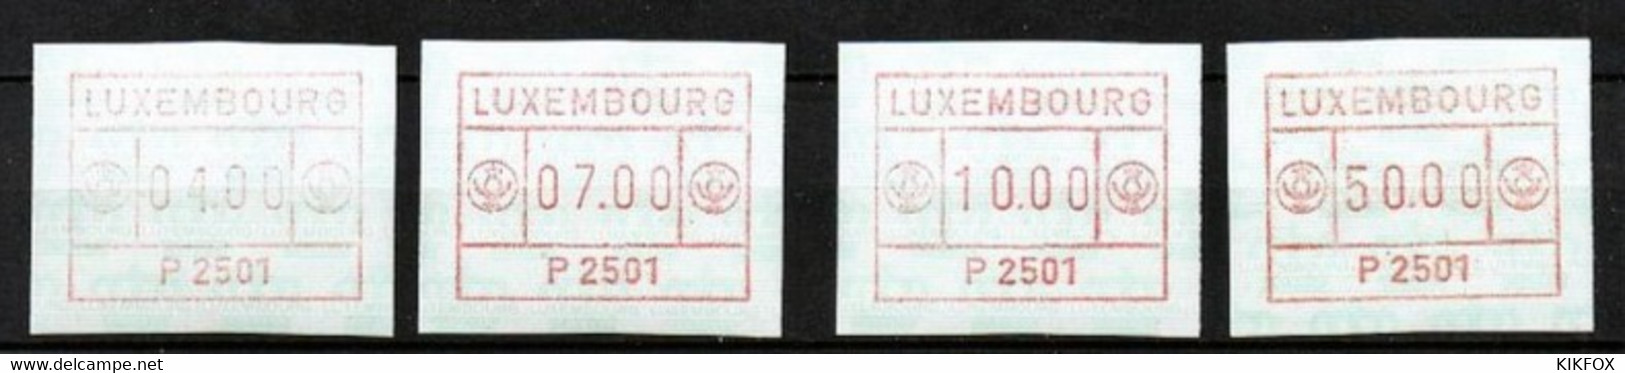 Luxembourg, Luxemburg , 1983, MI 1 ,AUTOMATENMARKEN, DISTRIBUTEUR , 4 WERTE - Postage Labels